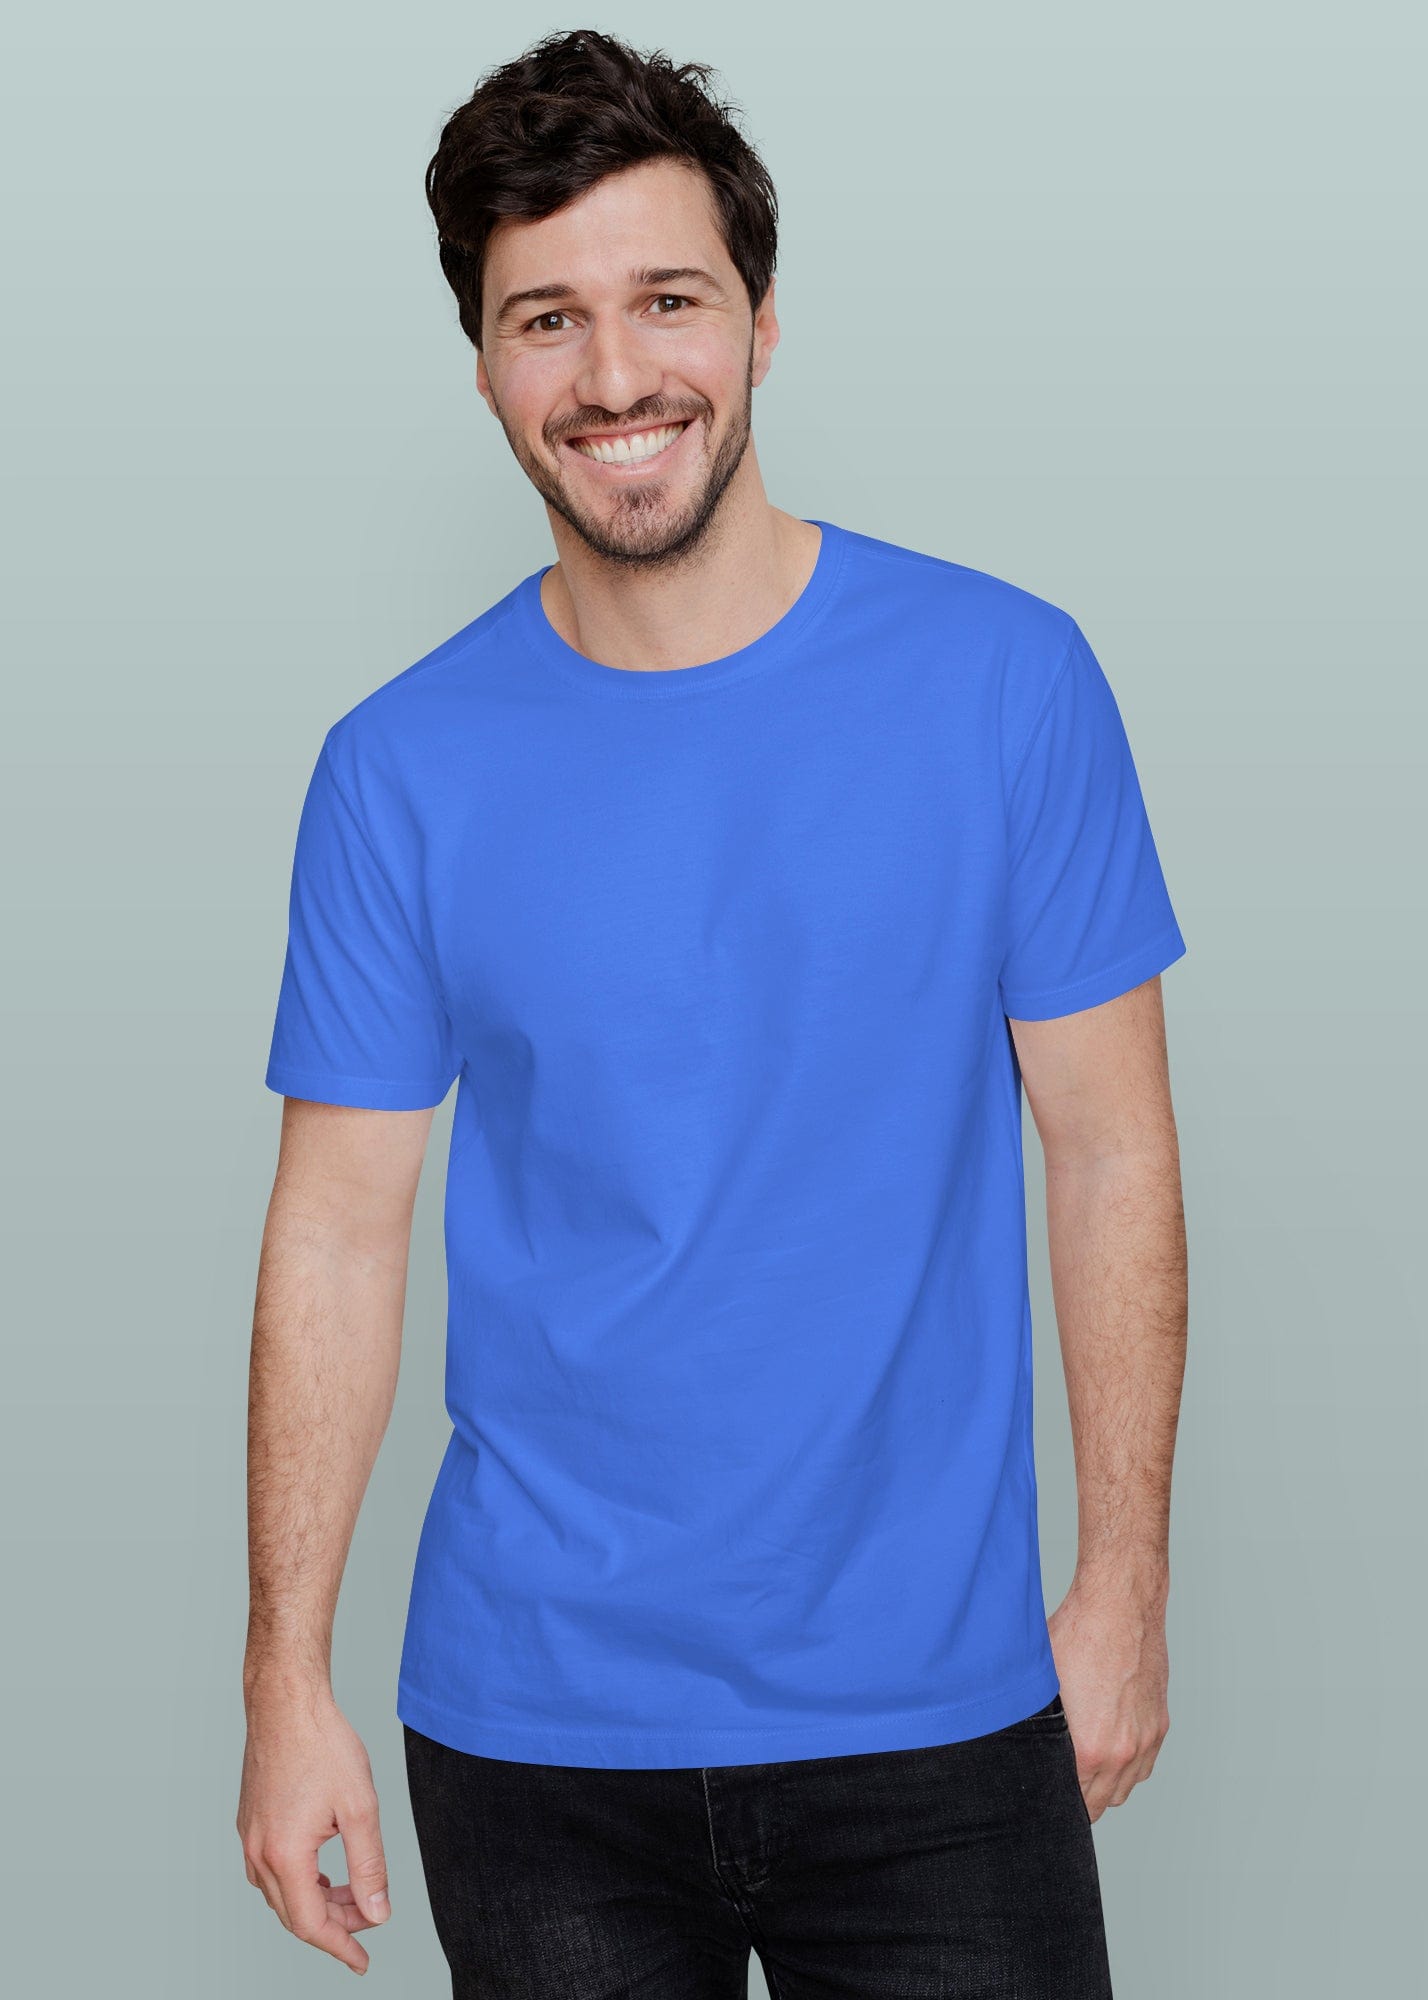 Solid Half Sleeve Premium Cotton T-shirt For Men